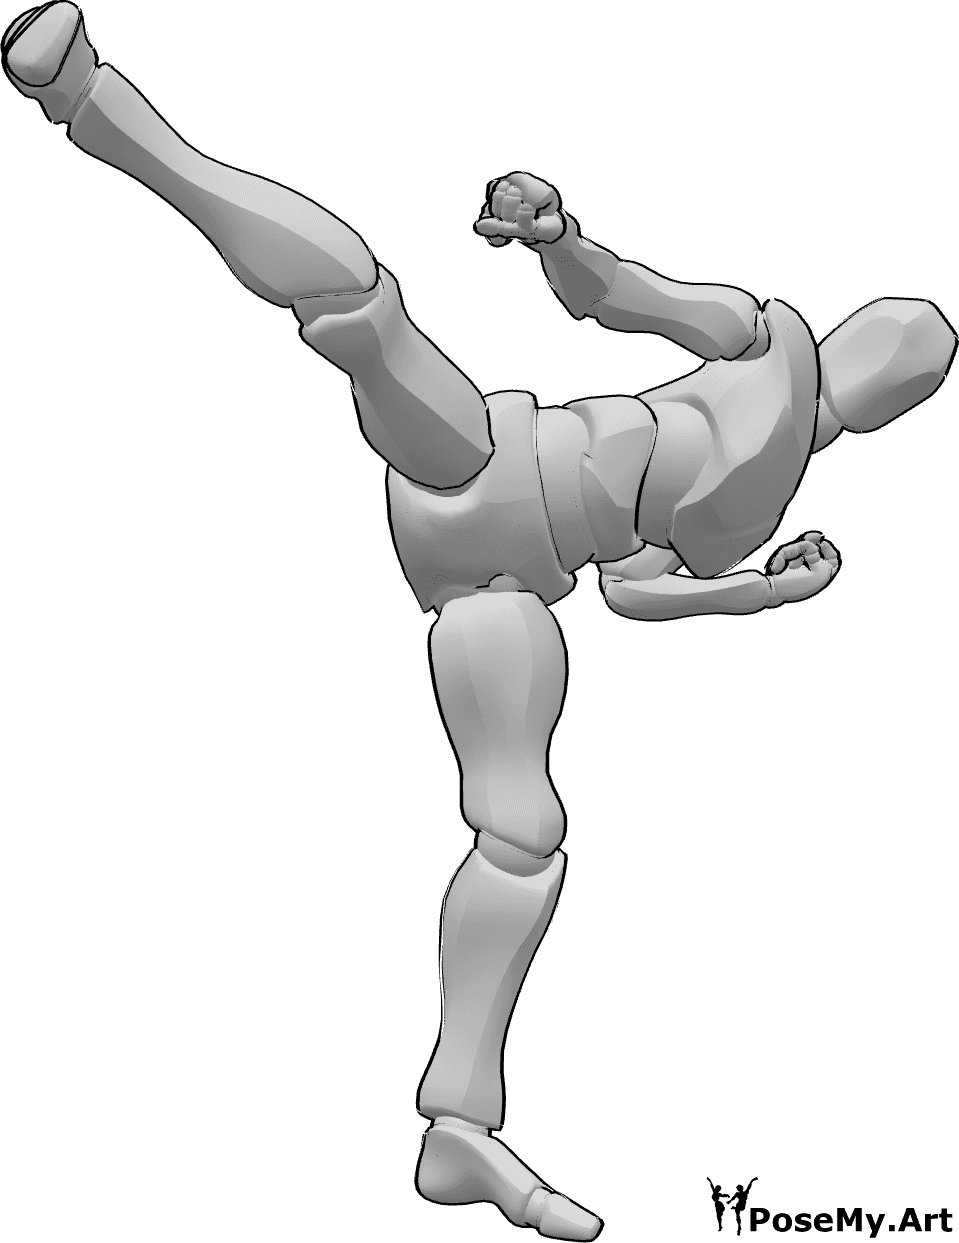 Chun Li's flying kick by njgp on DeviantArt